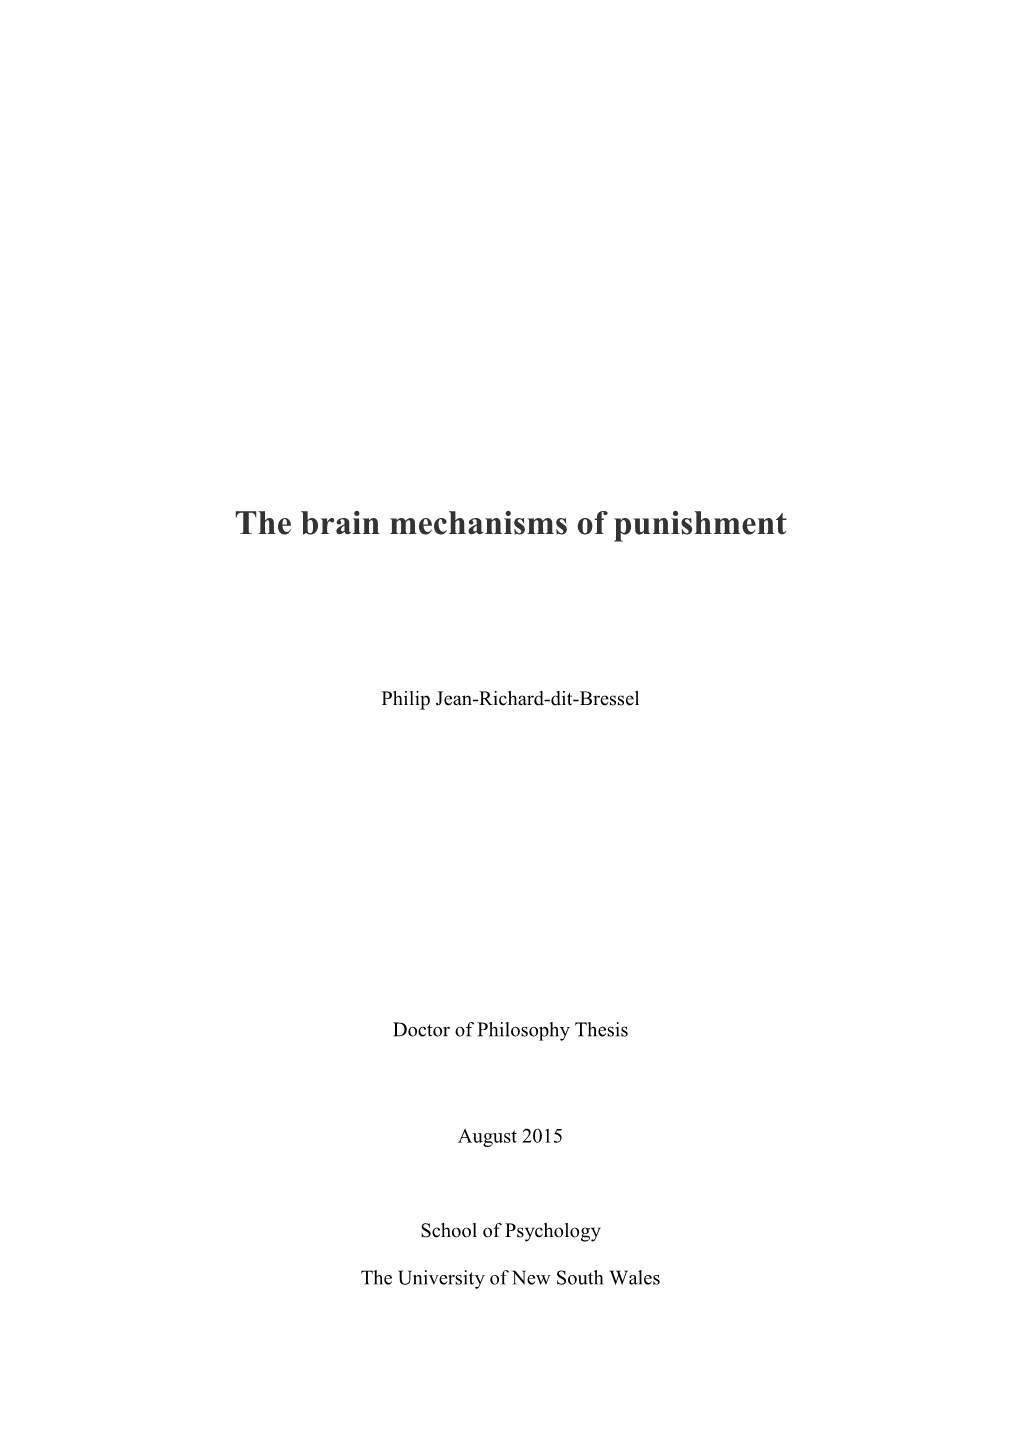 The Brain Mechanisms of Punishment